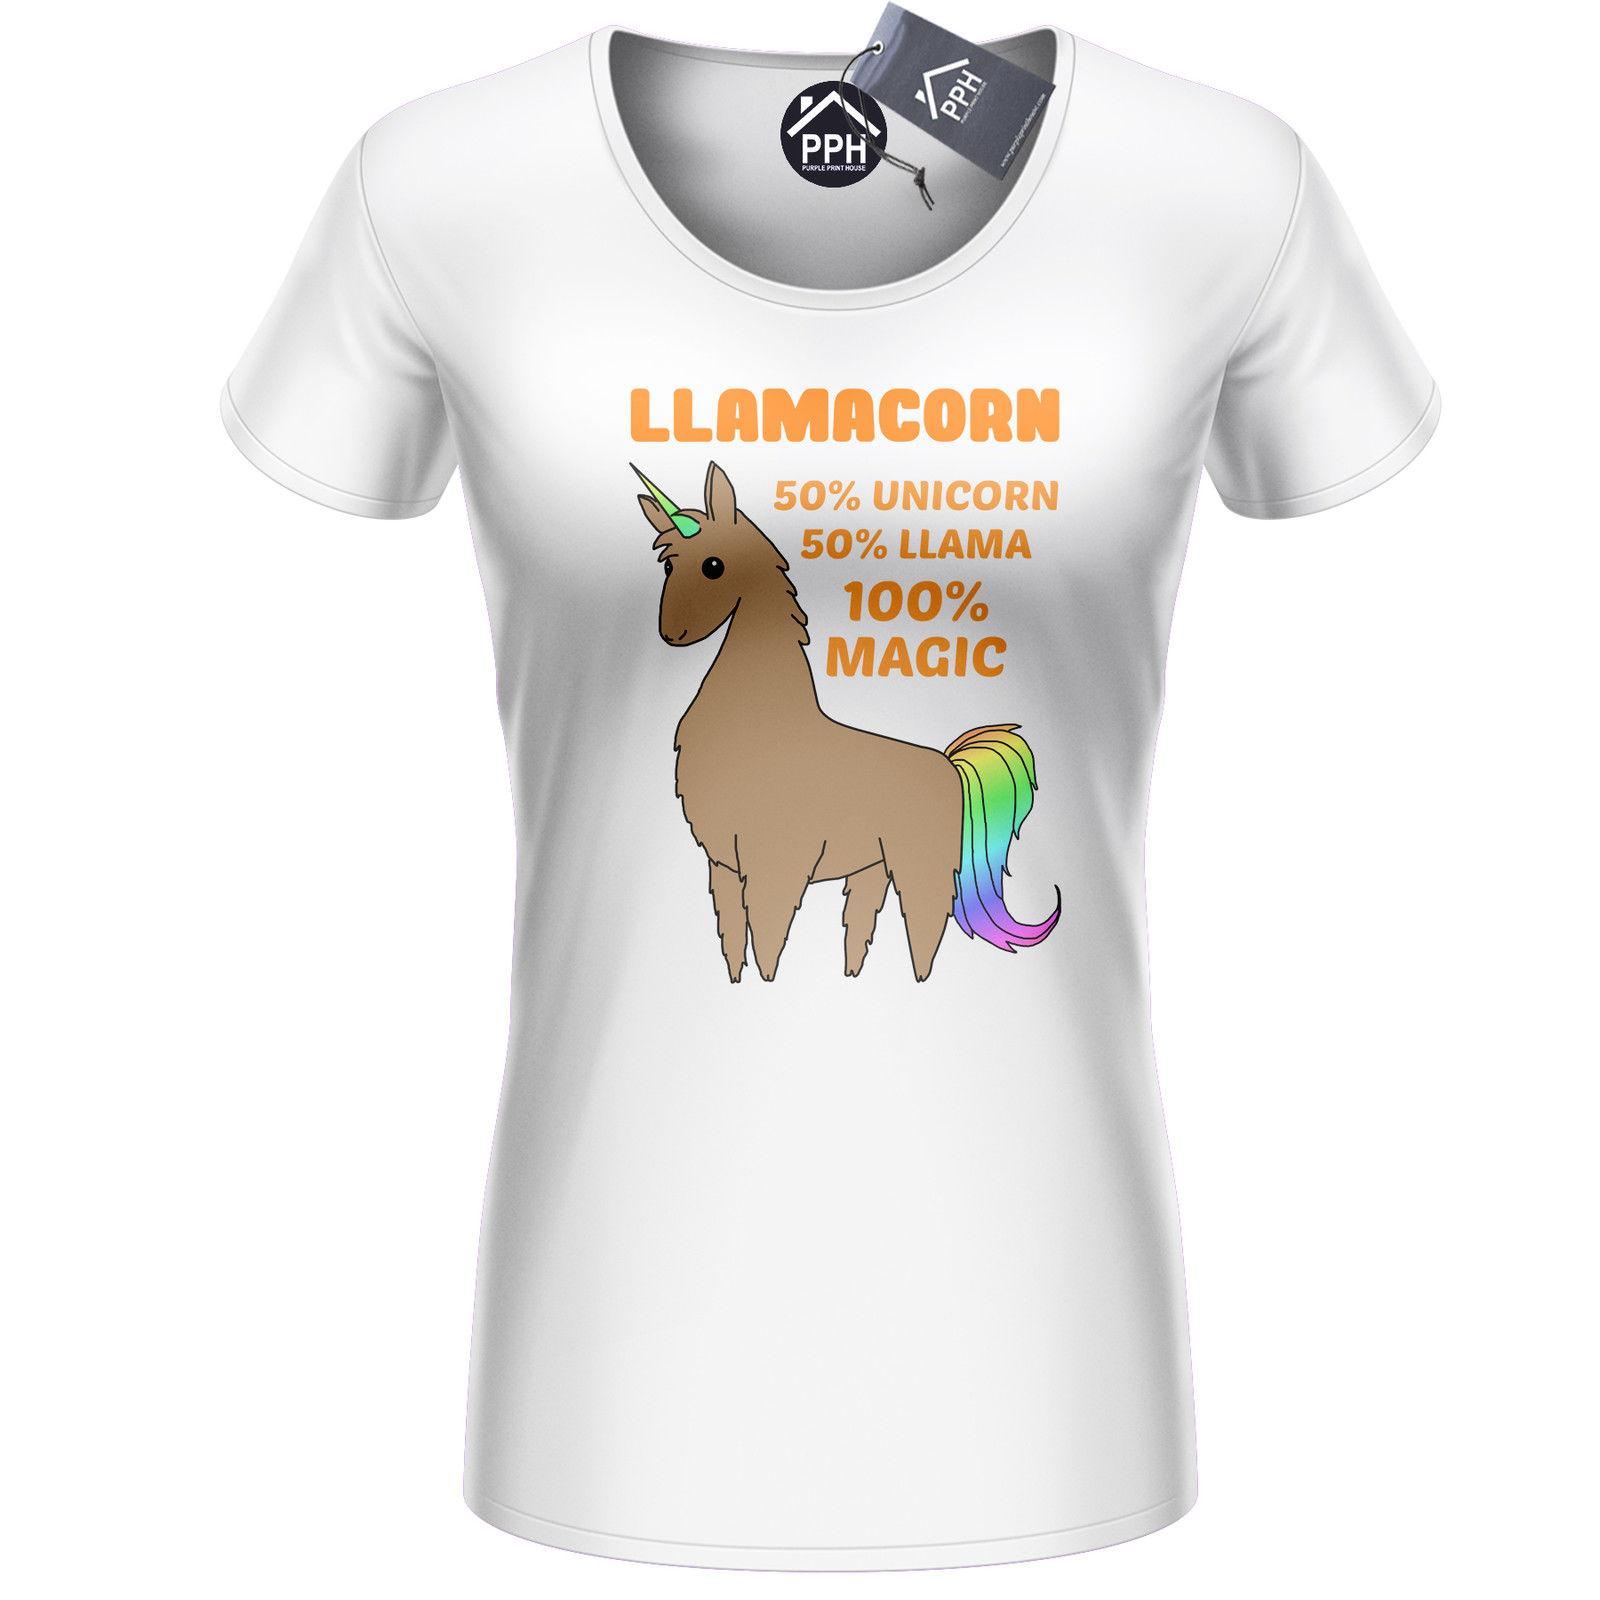 Llamacorn 50% Unicorn 50% Llama Funny Tshirt Womens - T-shirt , HD Wallpaper & Backgrounds